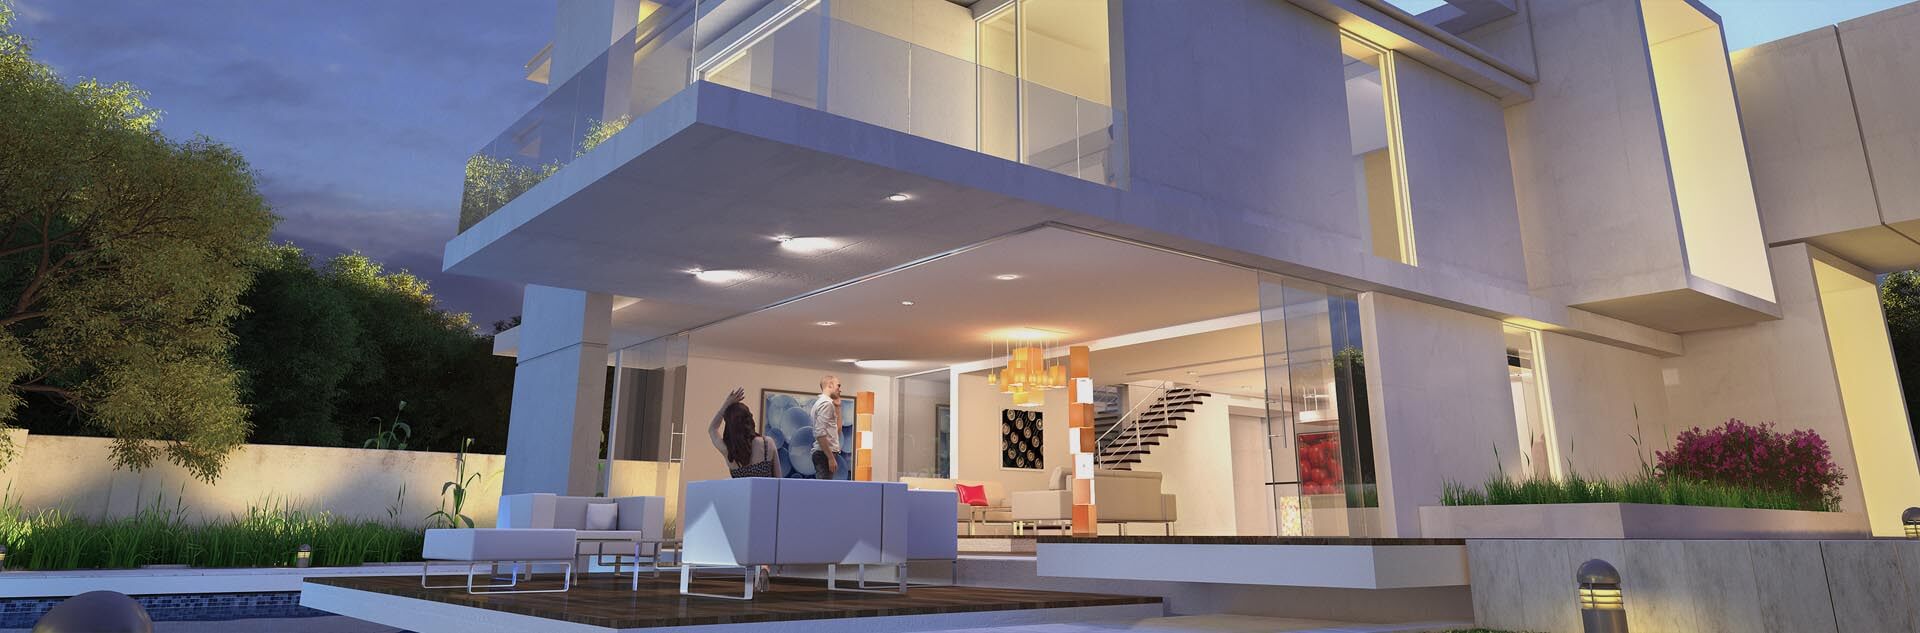 Residential Designs by Gulian Design Inc. - Long Beach, CA